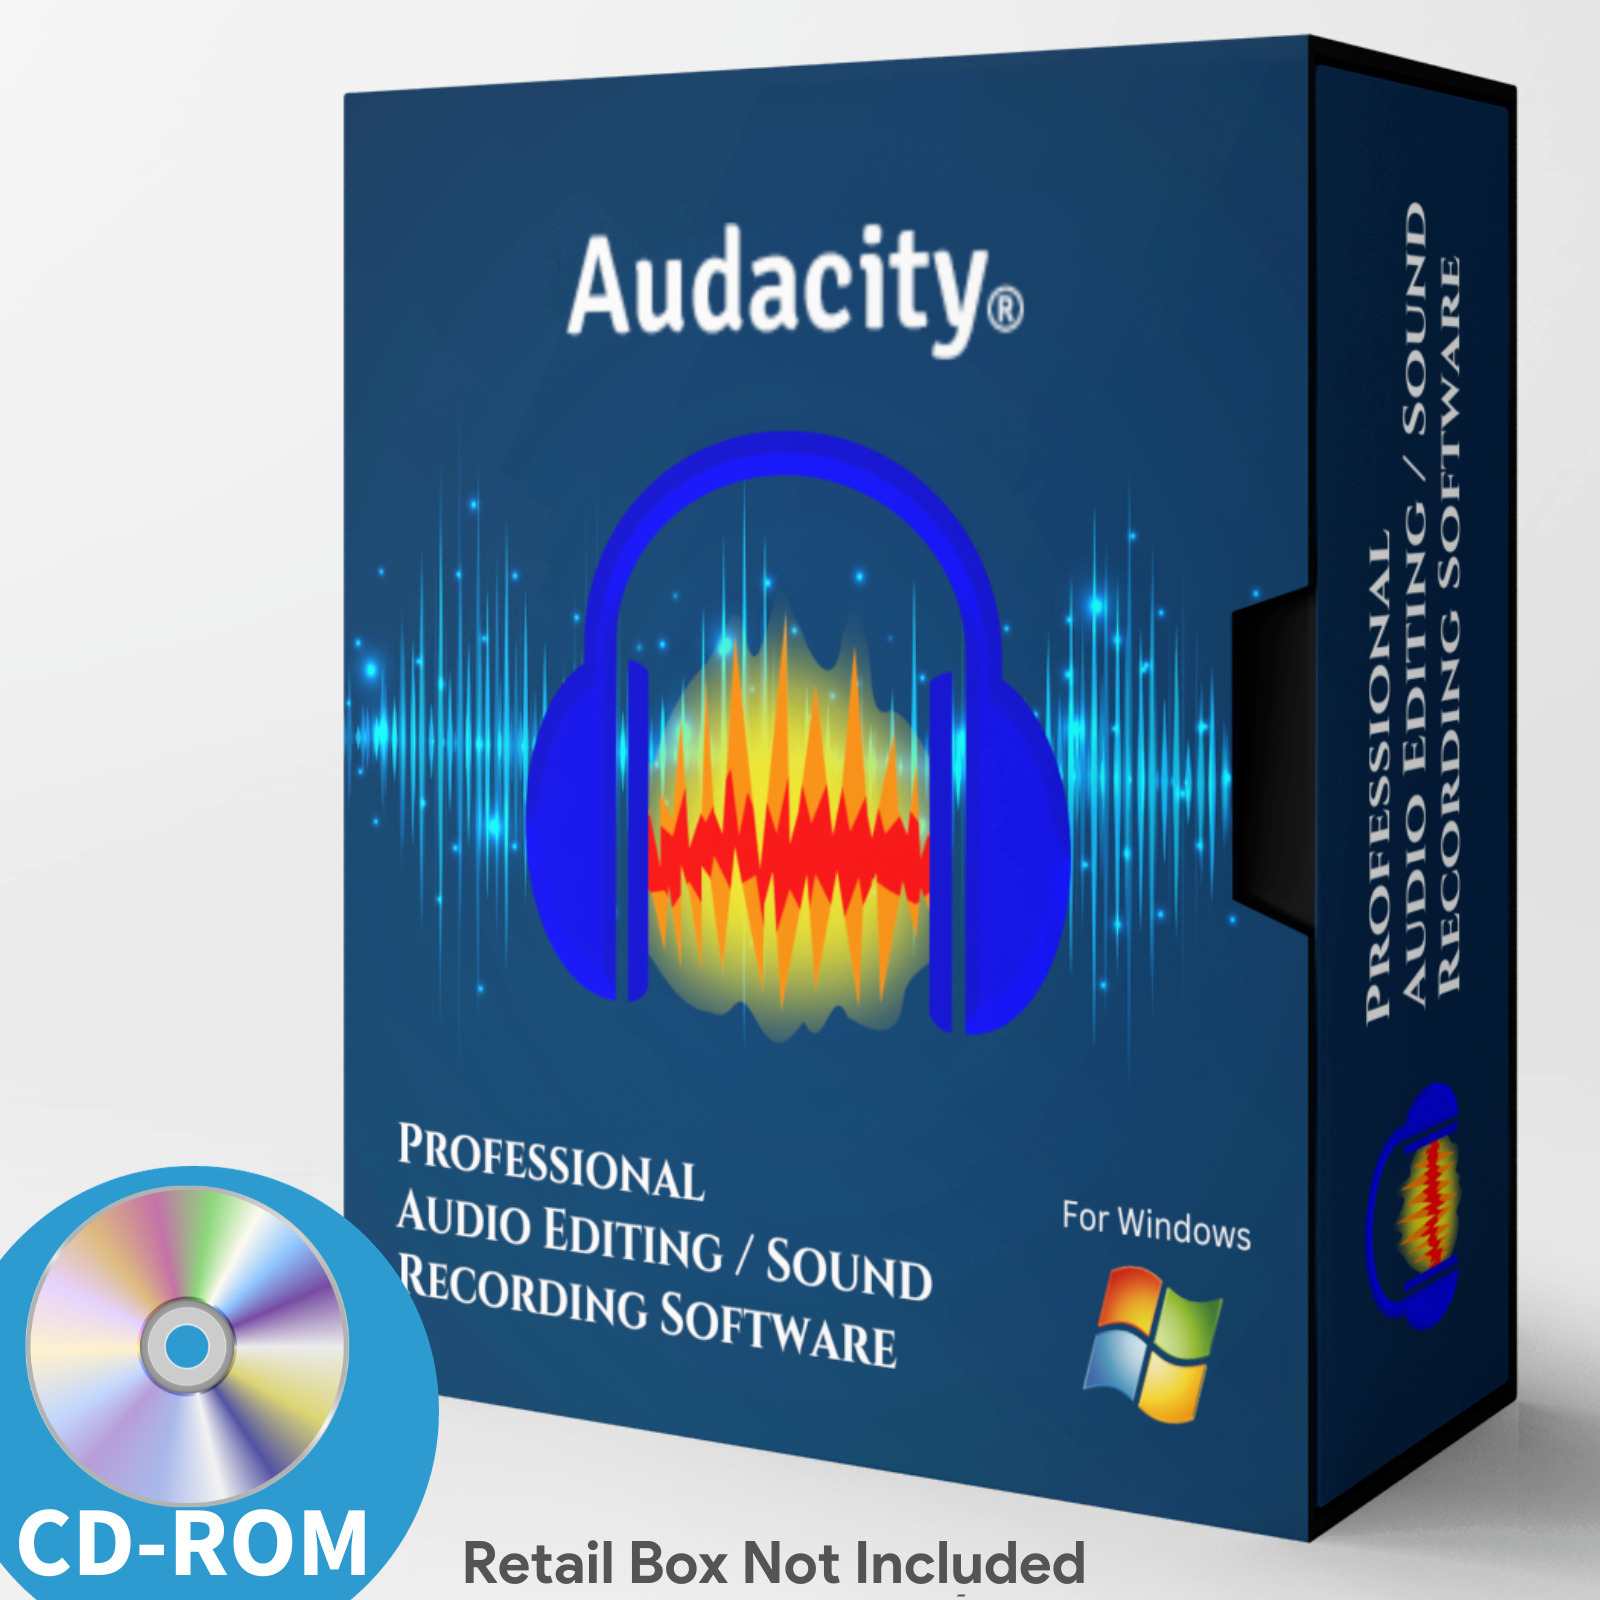 Audacity Professional Audio Music Editing - Recording Software-Beats-Windows-CD